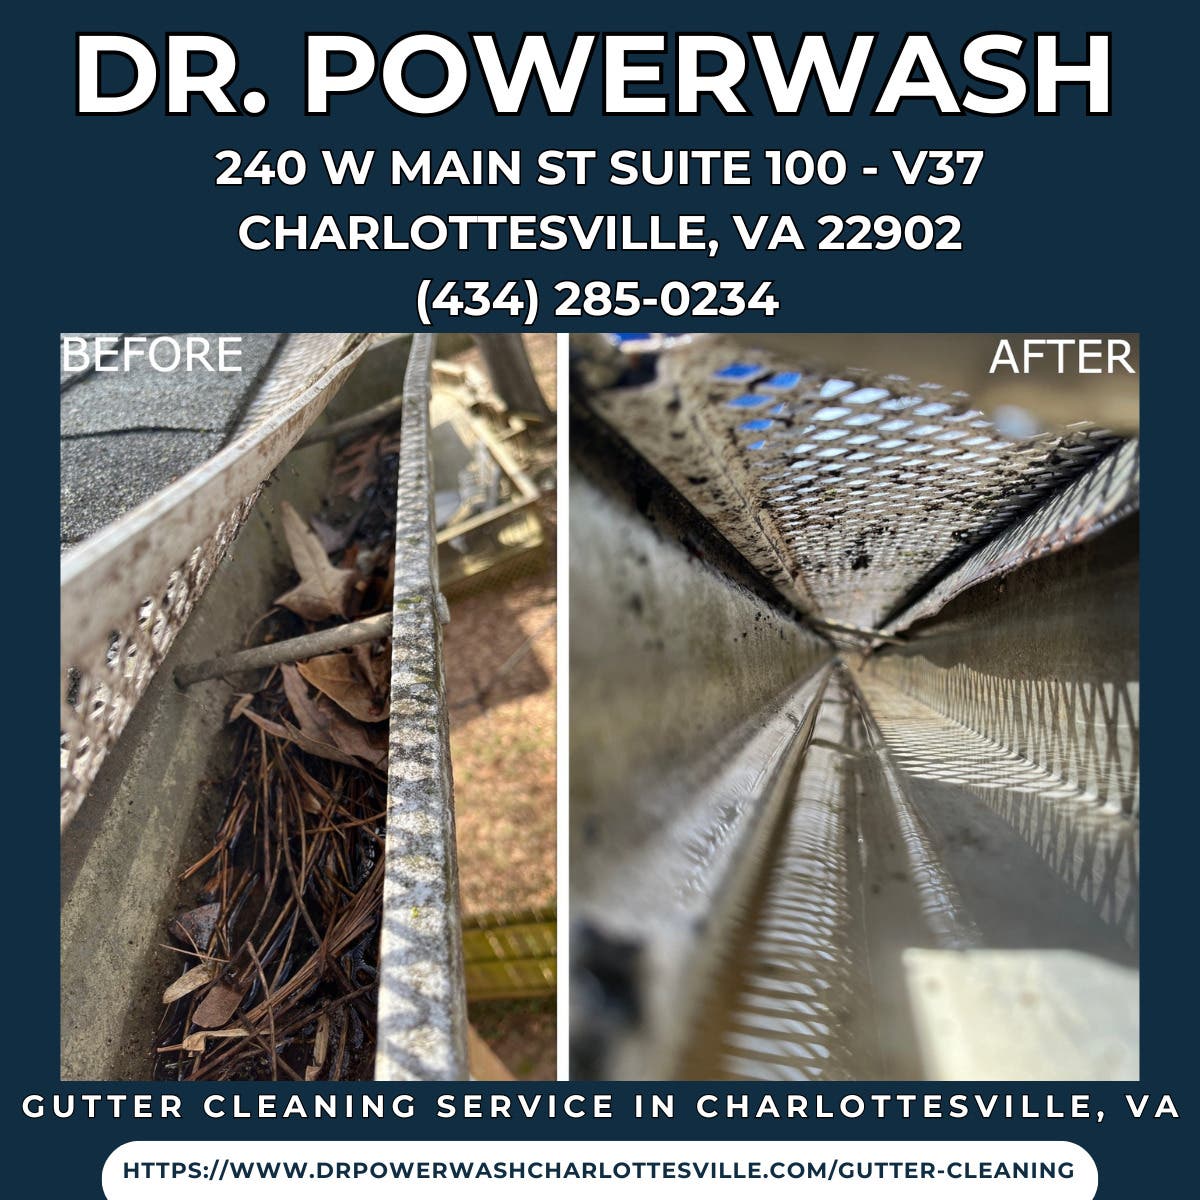 Gutter Cleaning Service in Charlottesville, VA - Dr. Powerwash